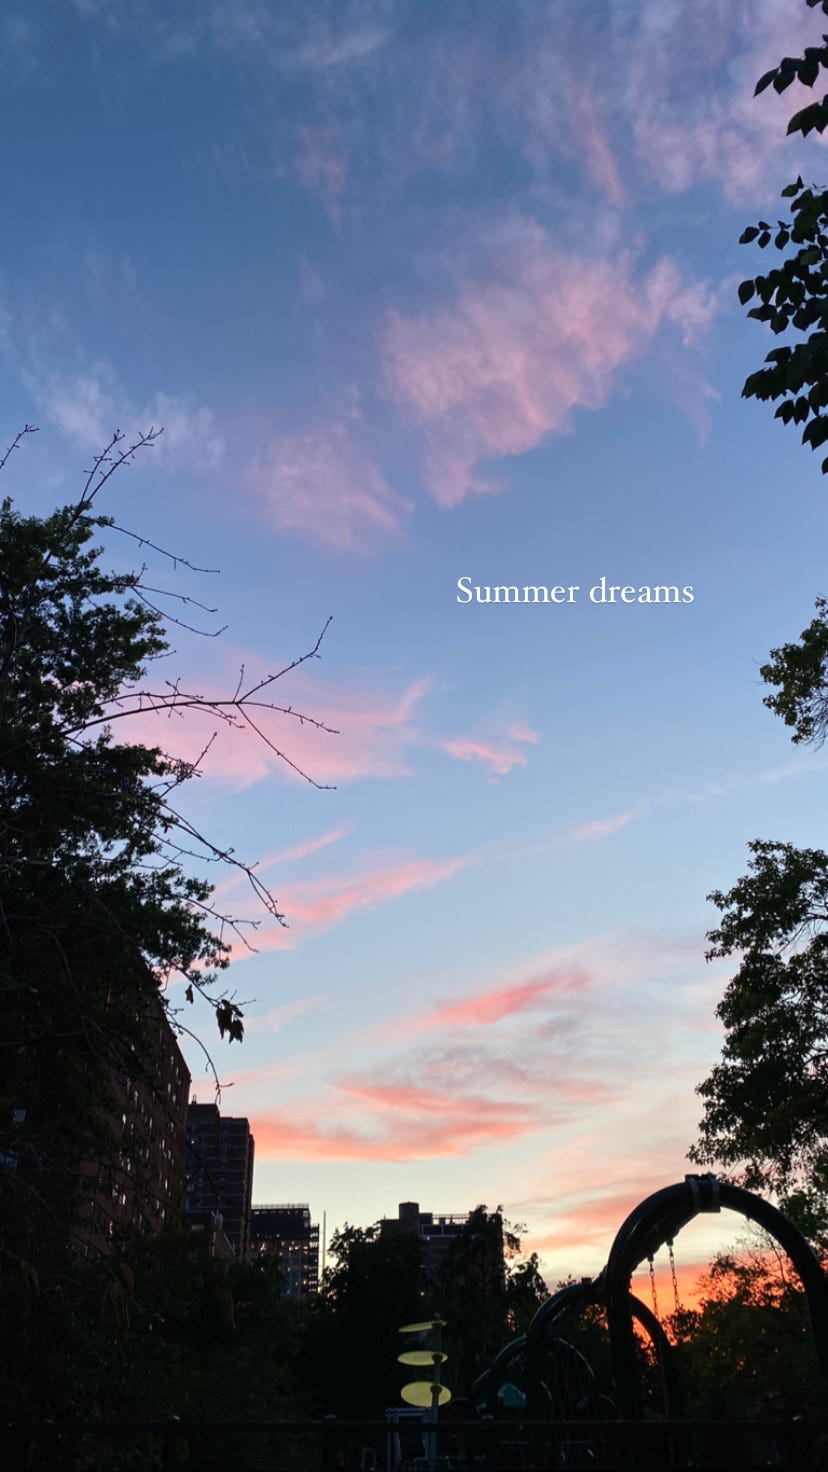 Dreams Summer on Tumblr